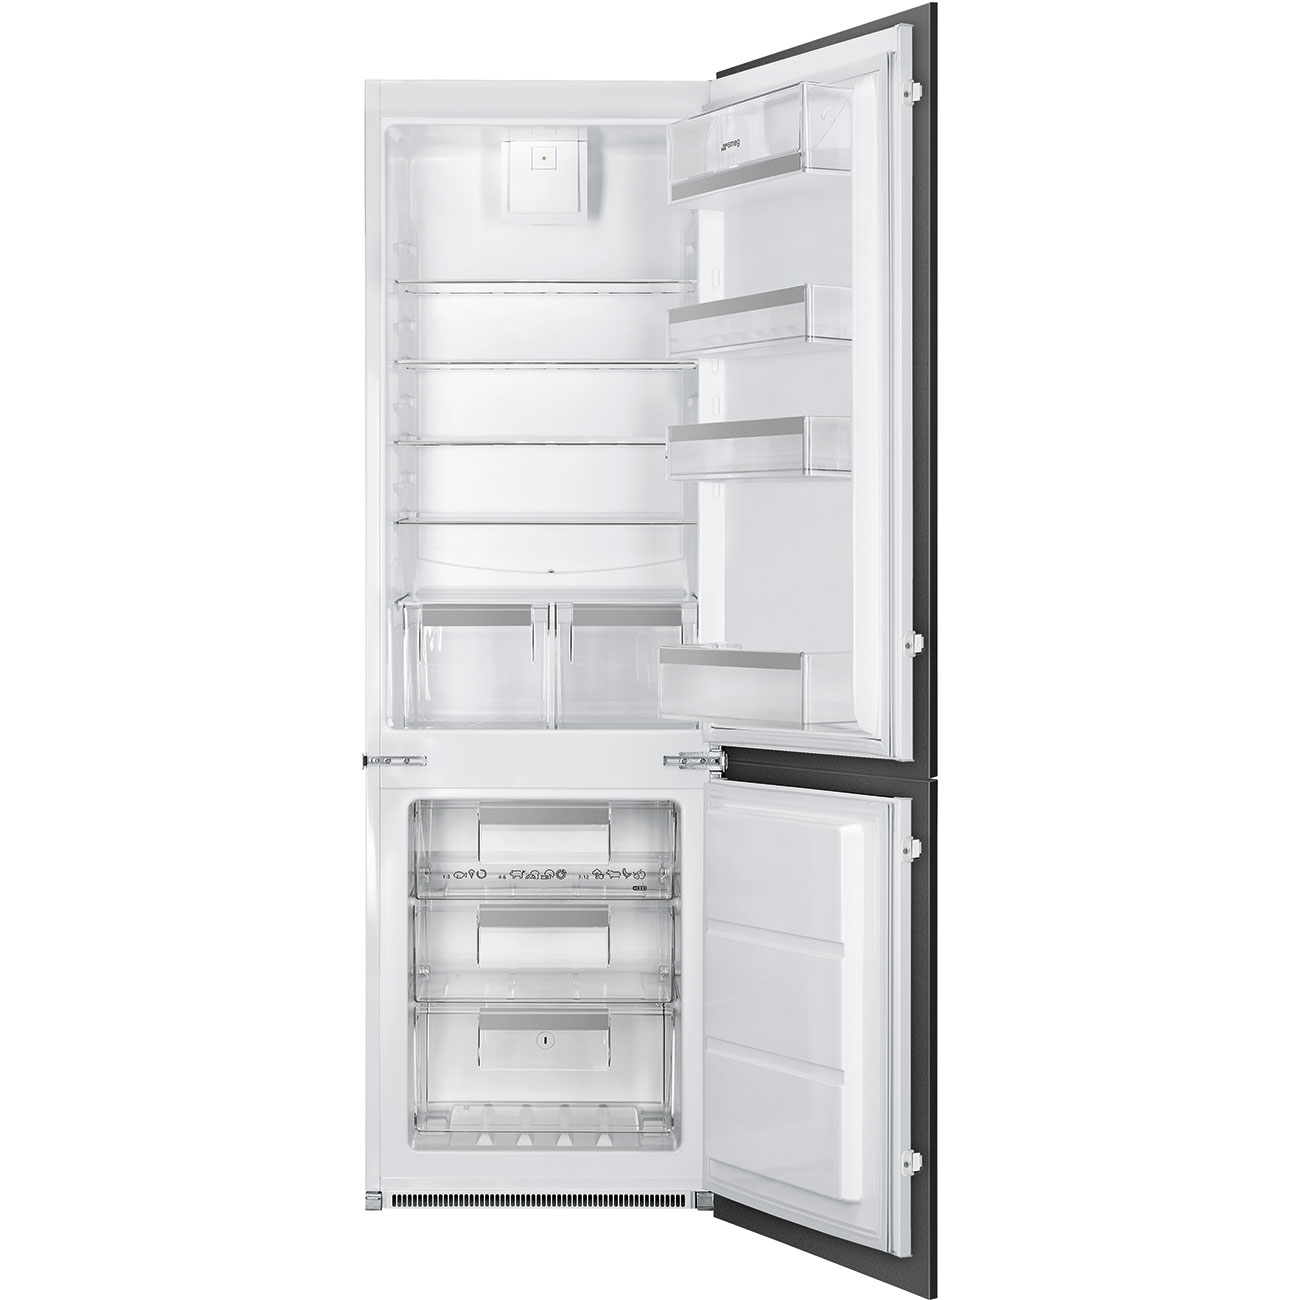 фото Встраиваемый холодильник smeg c8173n1f white